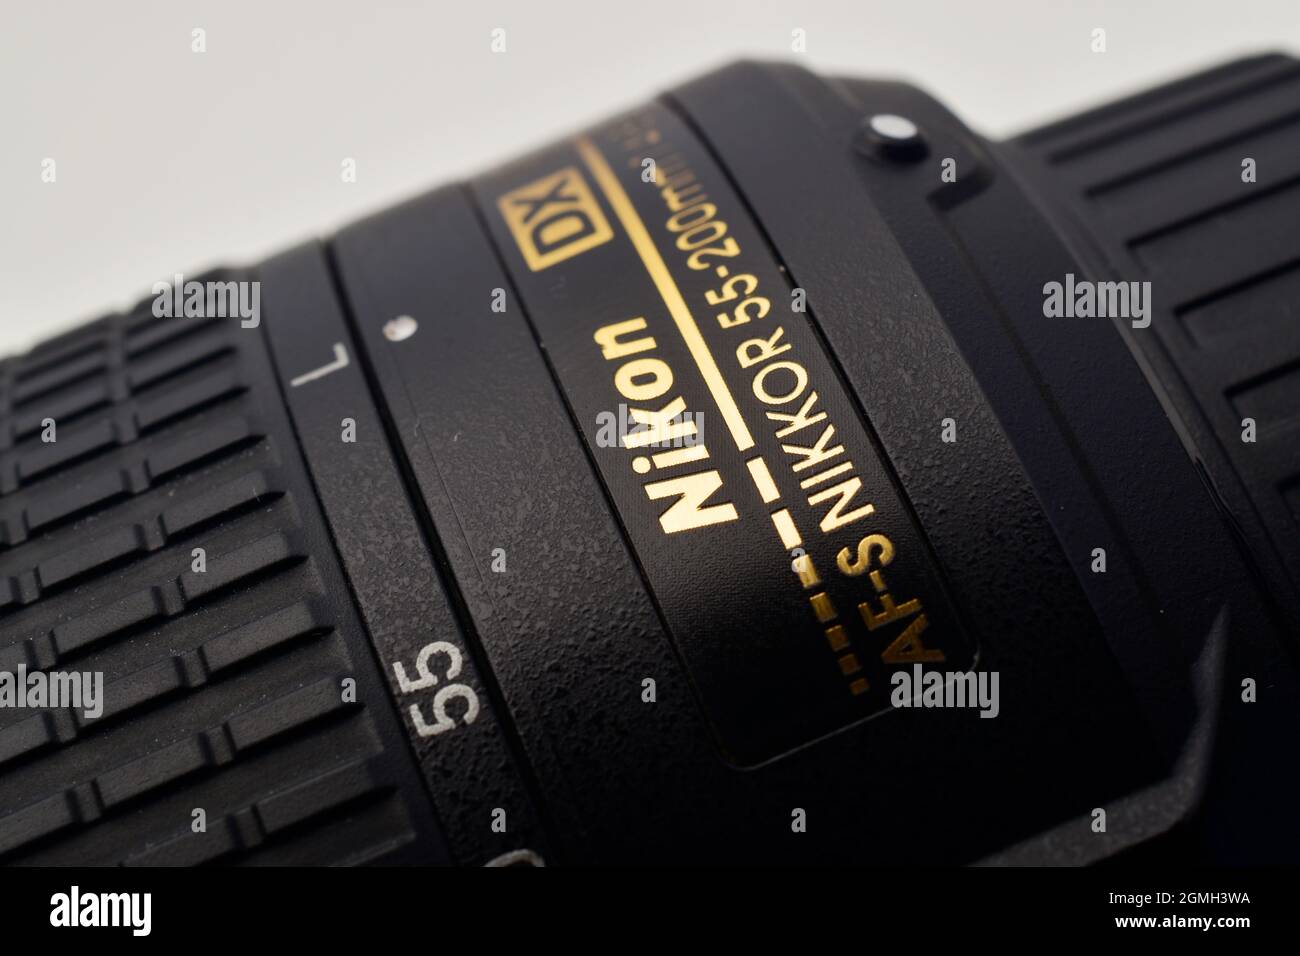 New Delhi, India, 03 December 2019:- Nikon Branding on Camera Lens Stock Photo